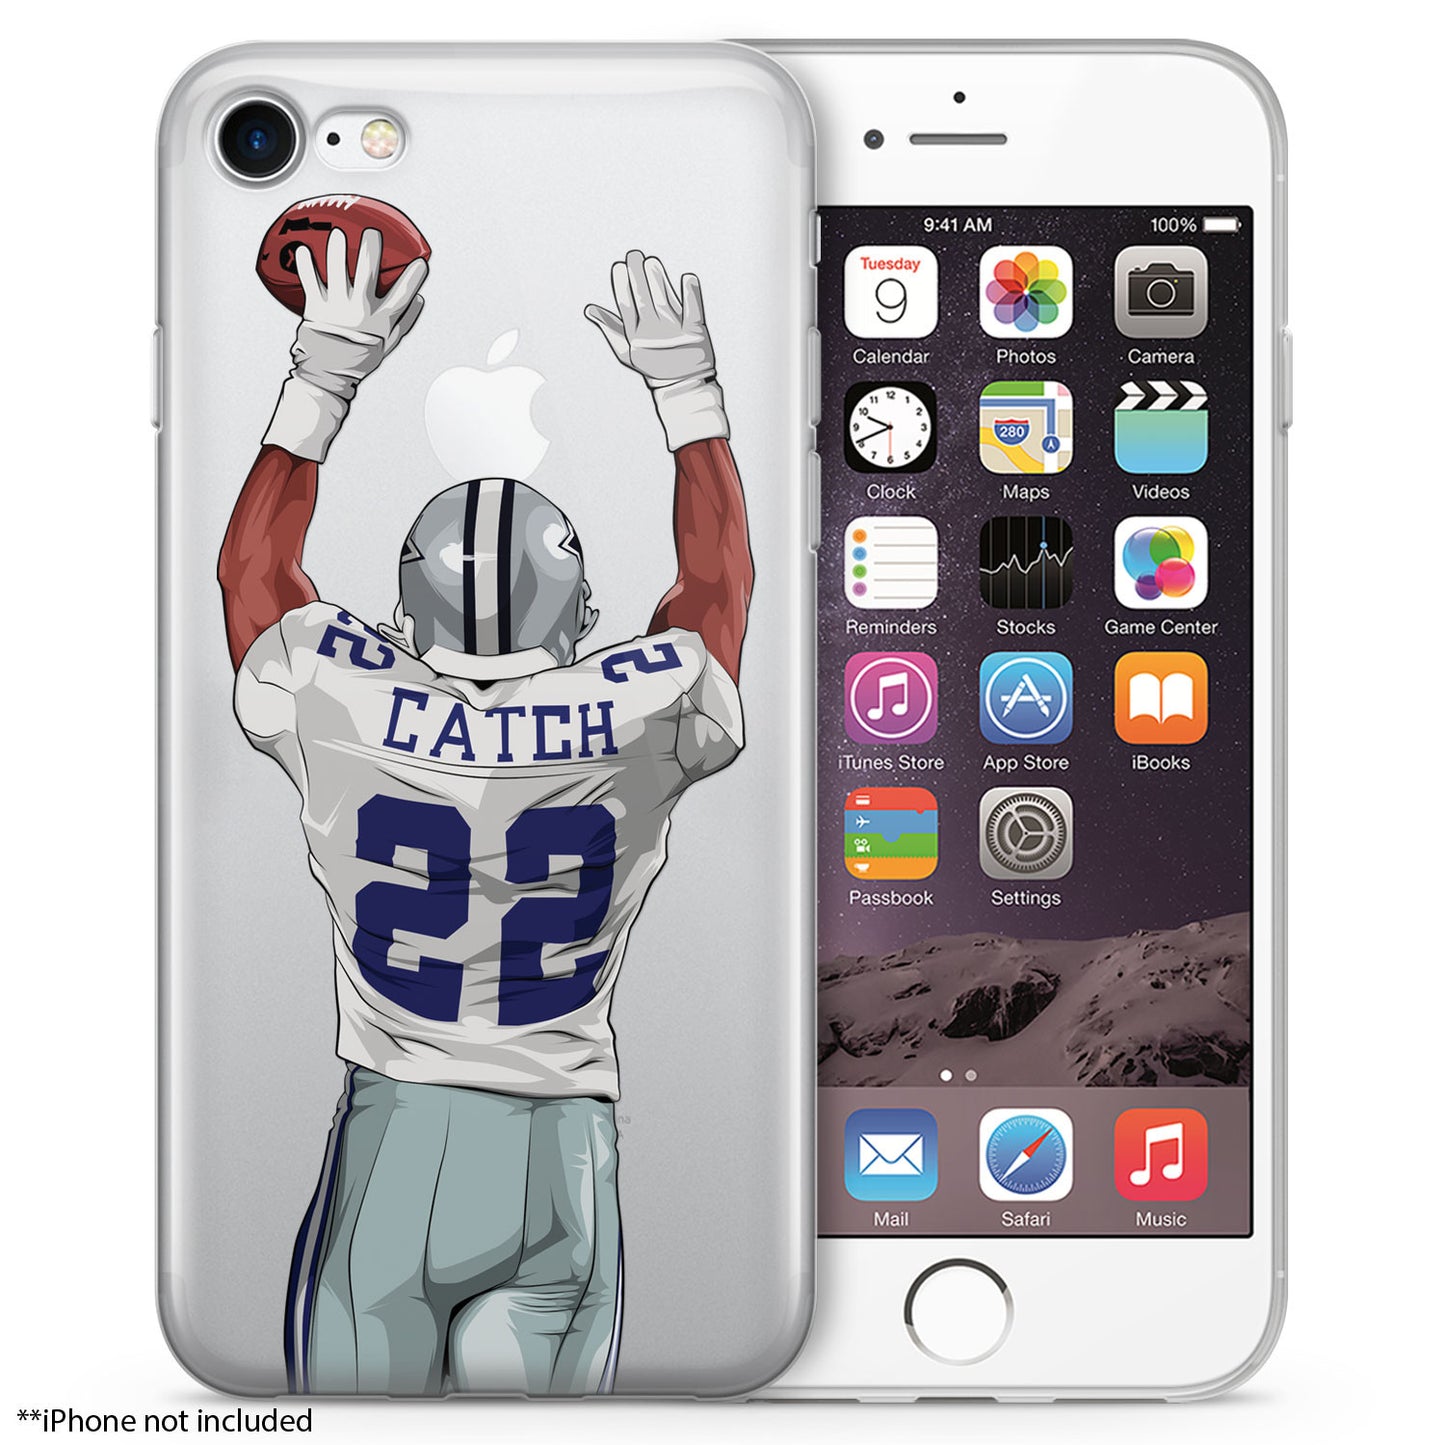 Catch 22 Football iPhone Case